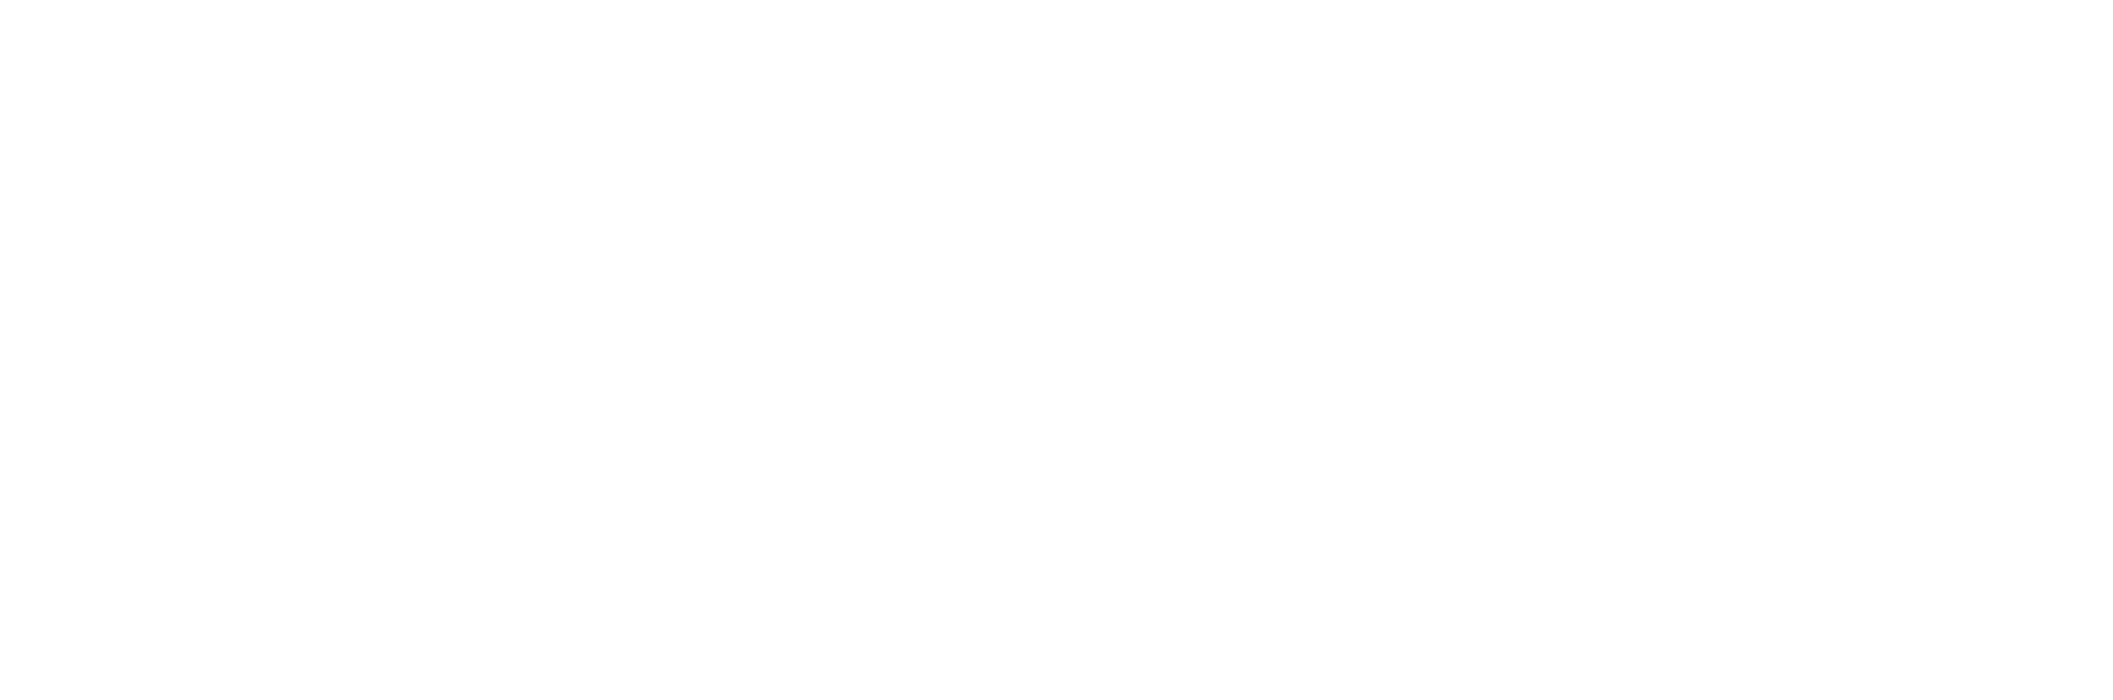 google_logo_white